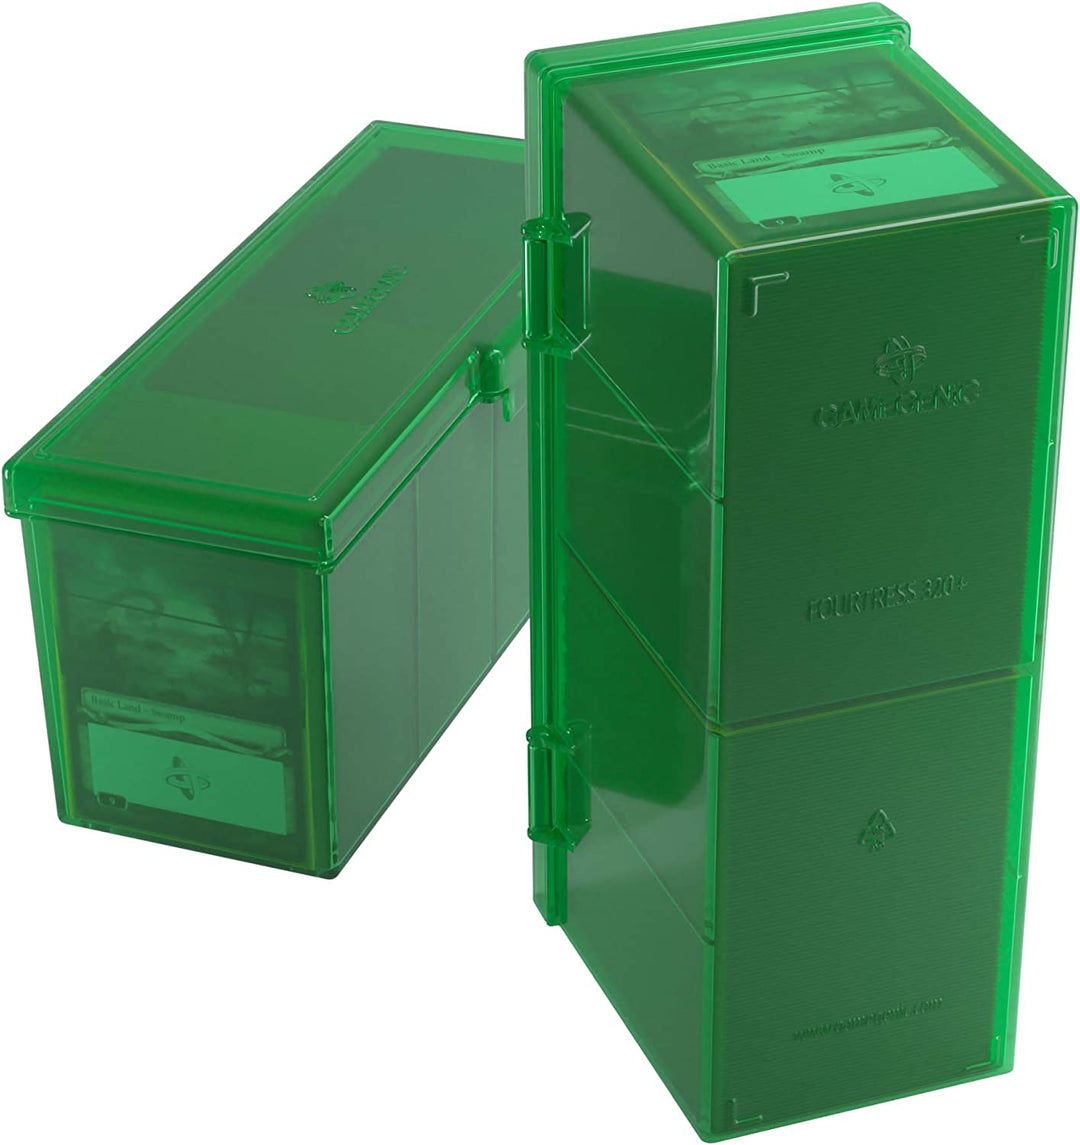 Gamegenic Fourtress 320+ Card Deck Holder, Green